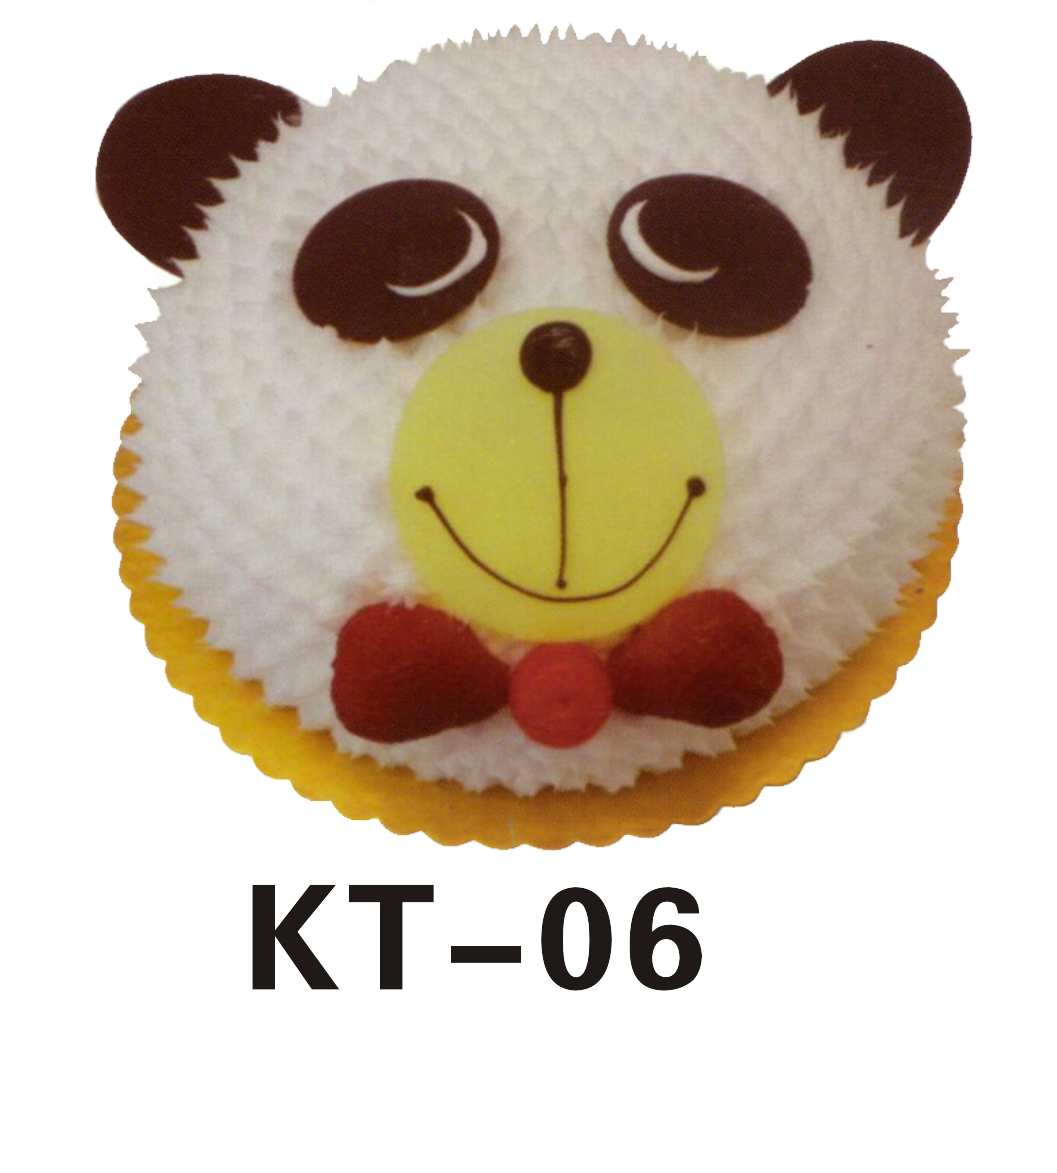 Torte Fruitcake Giant Panda Birthday Cake - Torte Fruitcake Giant Panda Birthday Cake (1057x1173)